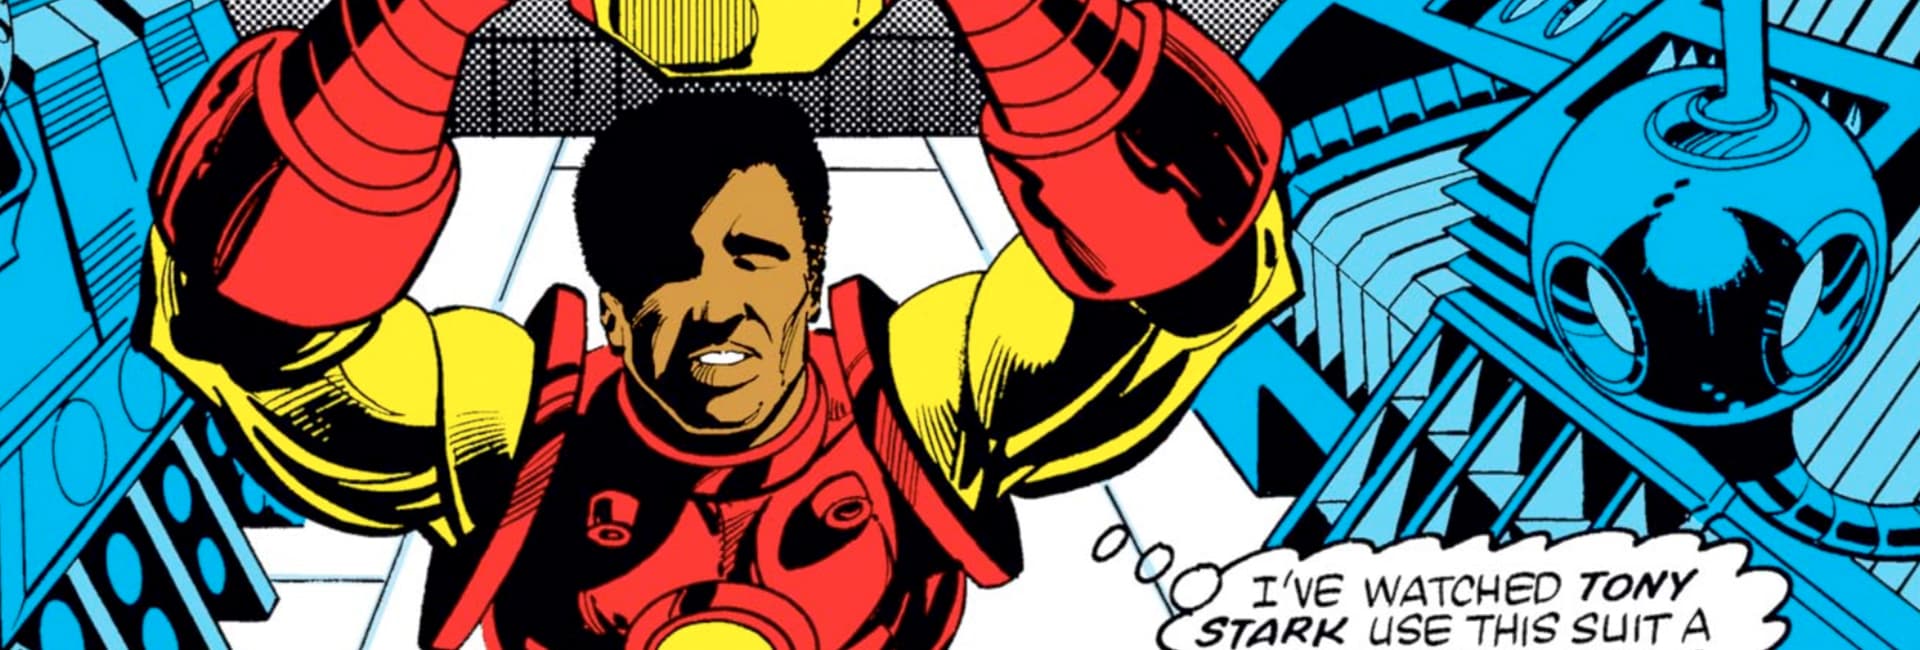 Iron Man Character Variant (James "Rhodey" Rhodes)